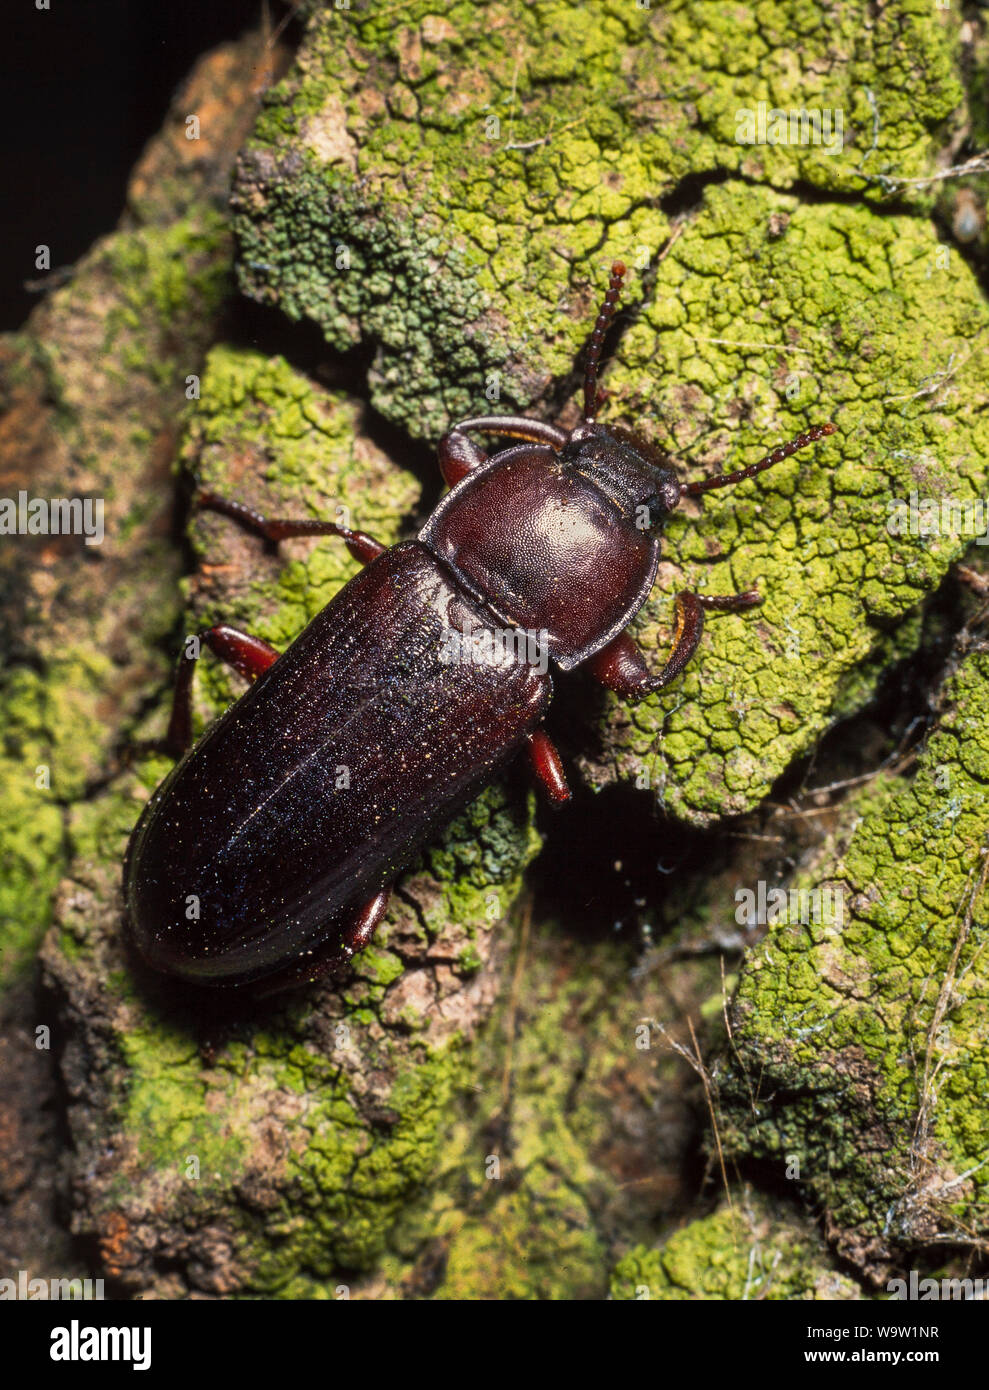 Mealworm beetle, Tenebrio molitor, a pest often found in granaries. Stock Photo